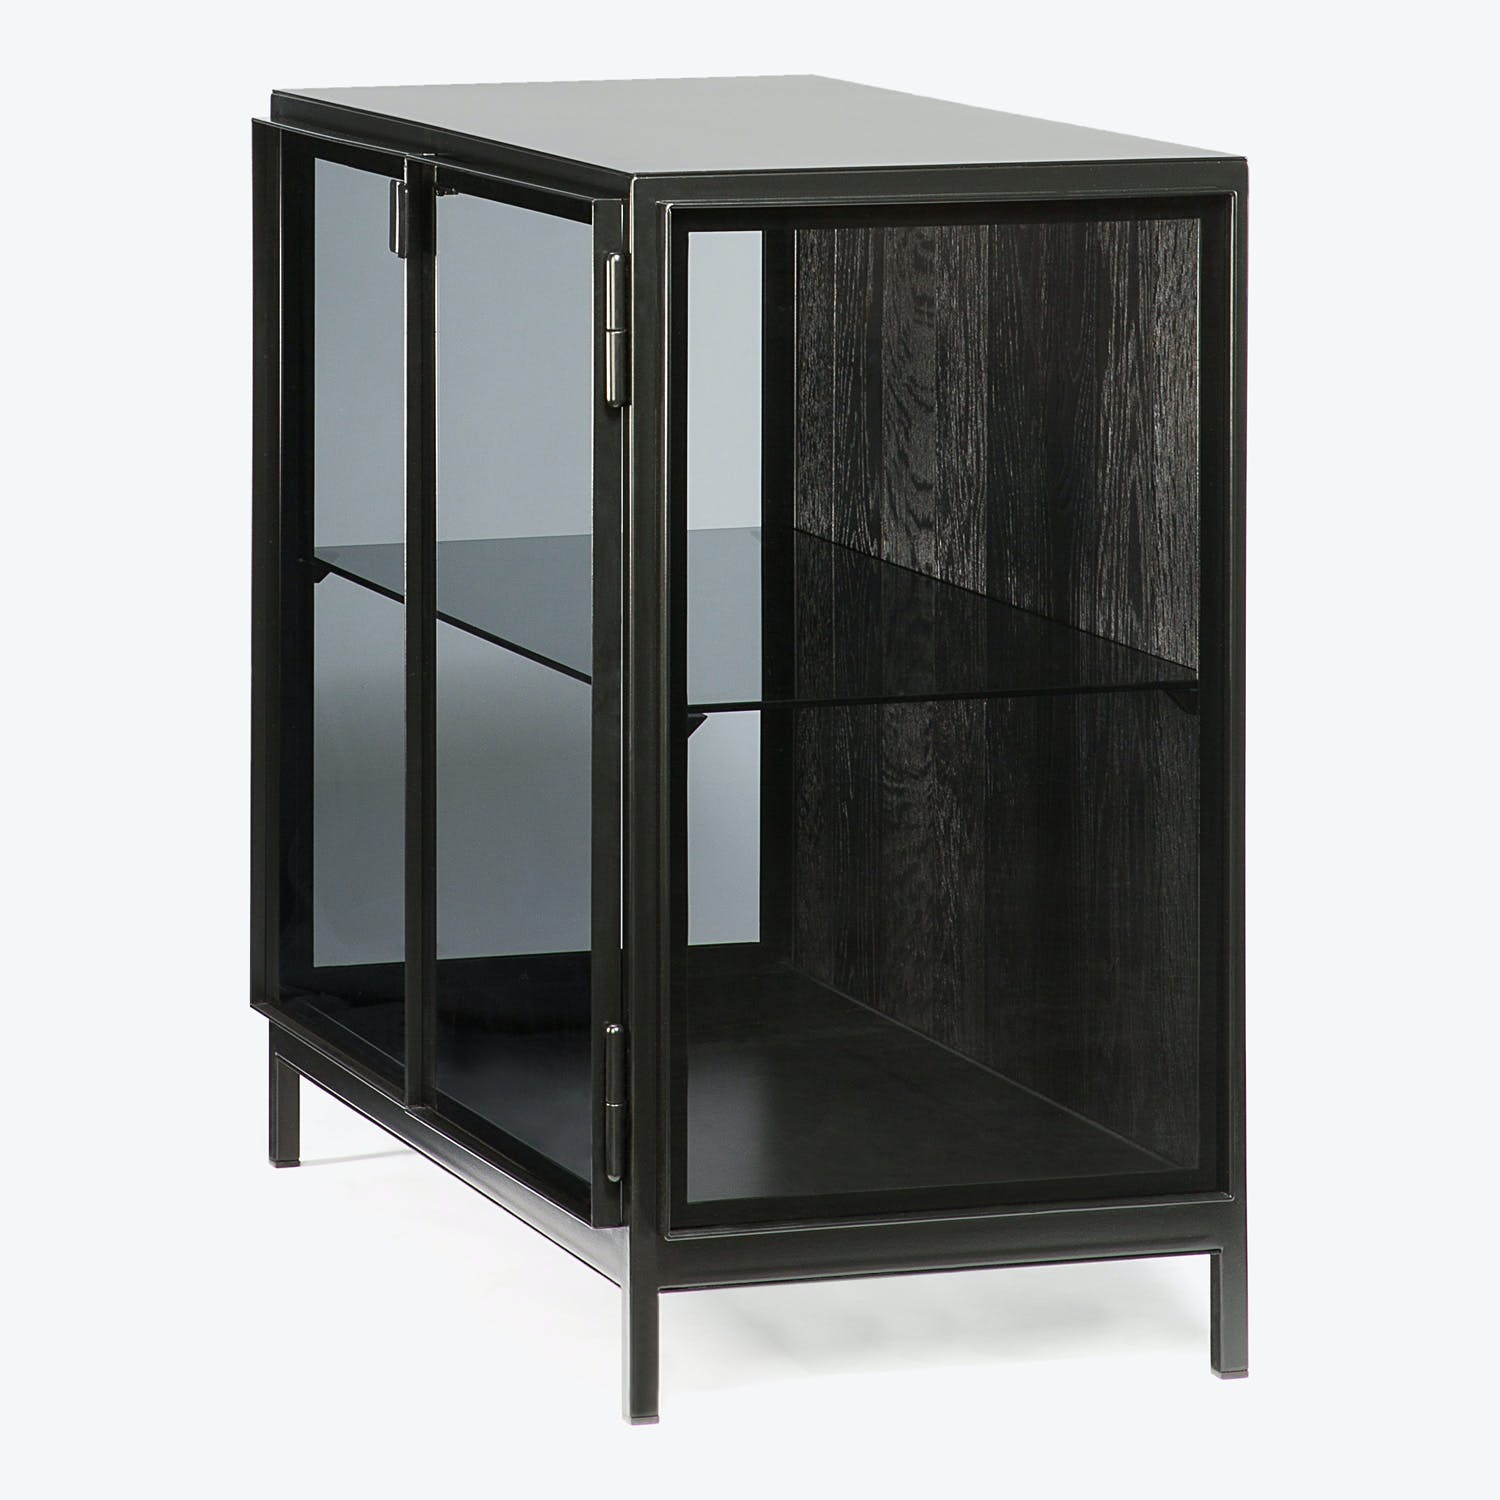 Sleek and modern glass display cabinet with adjustable glass shelves.